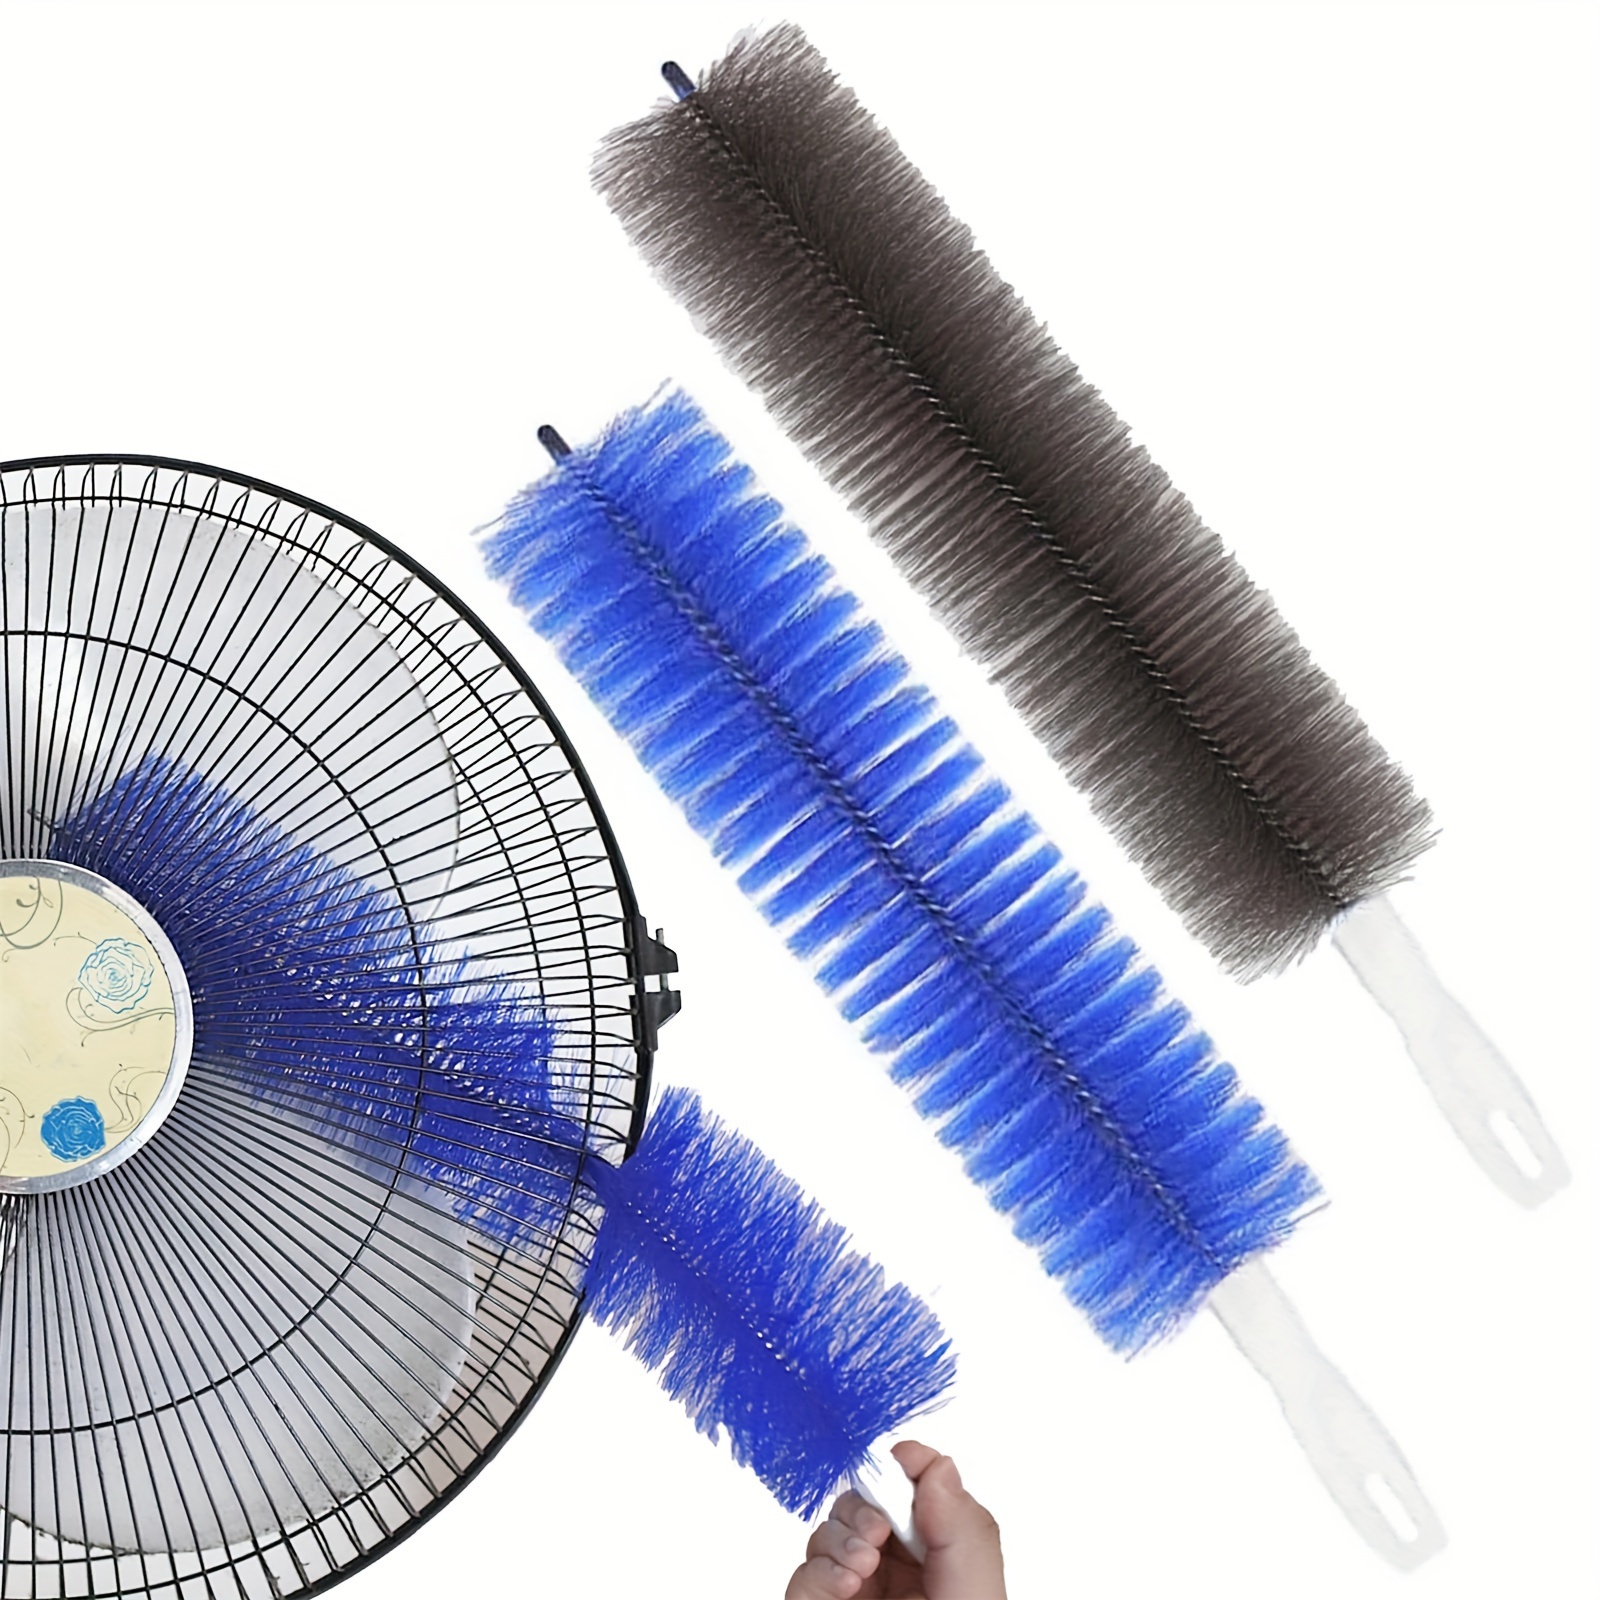 Fan Cleaning Brush, Multifunctional Cleaning Brush, Drain Brush